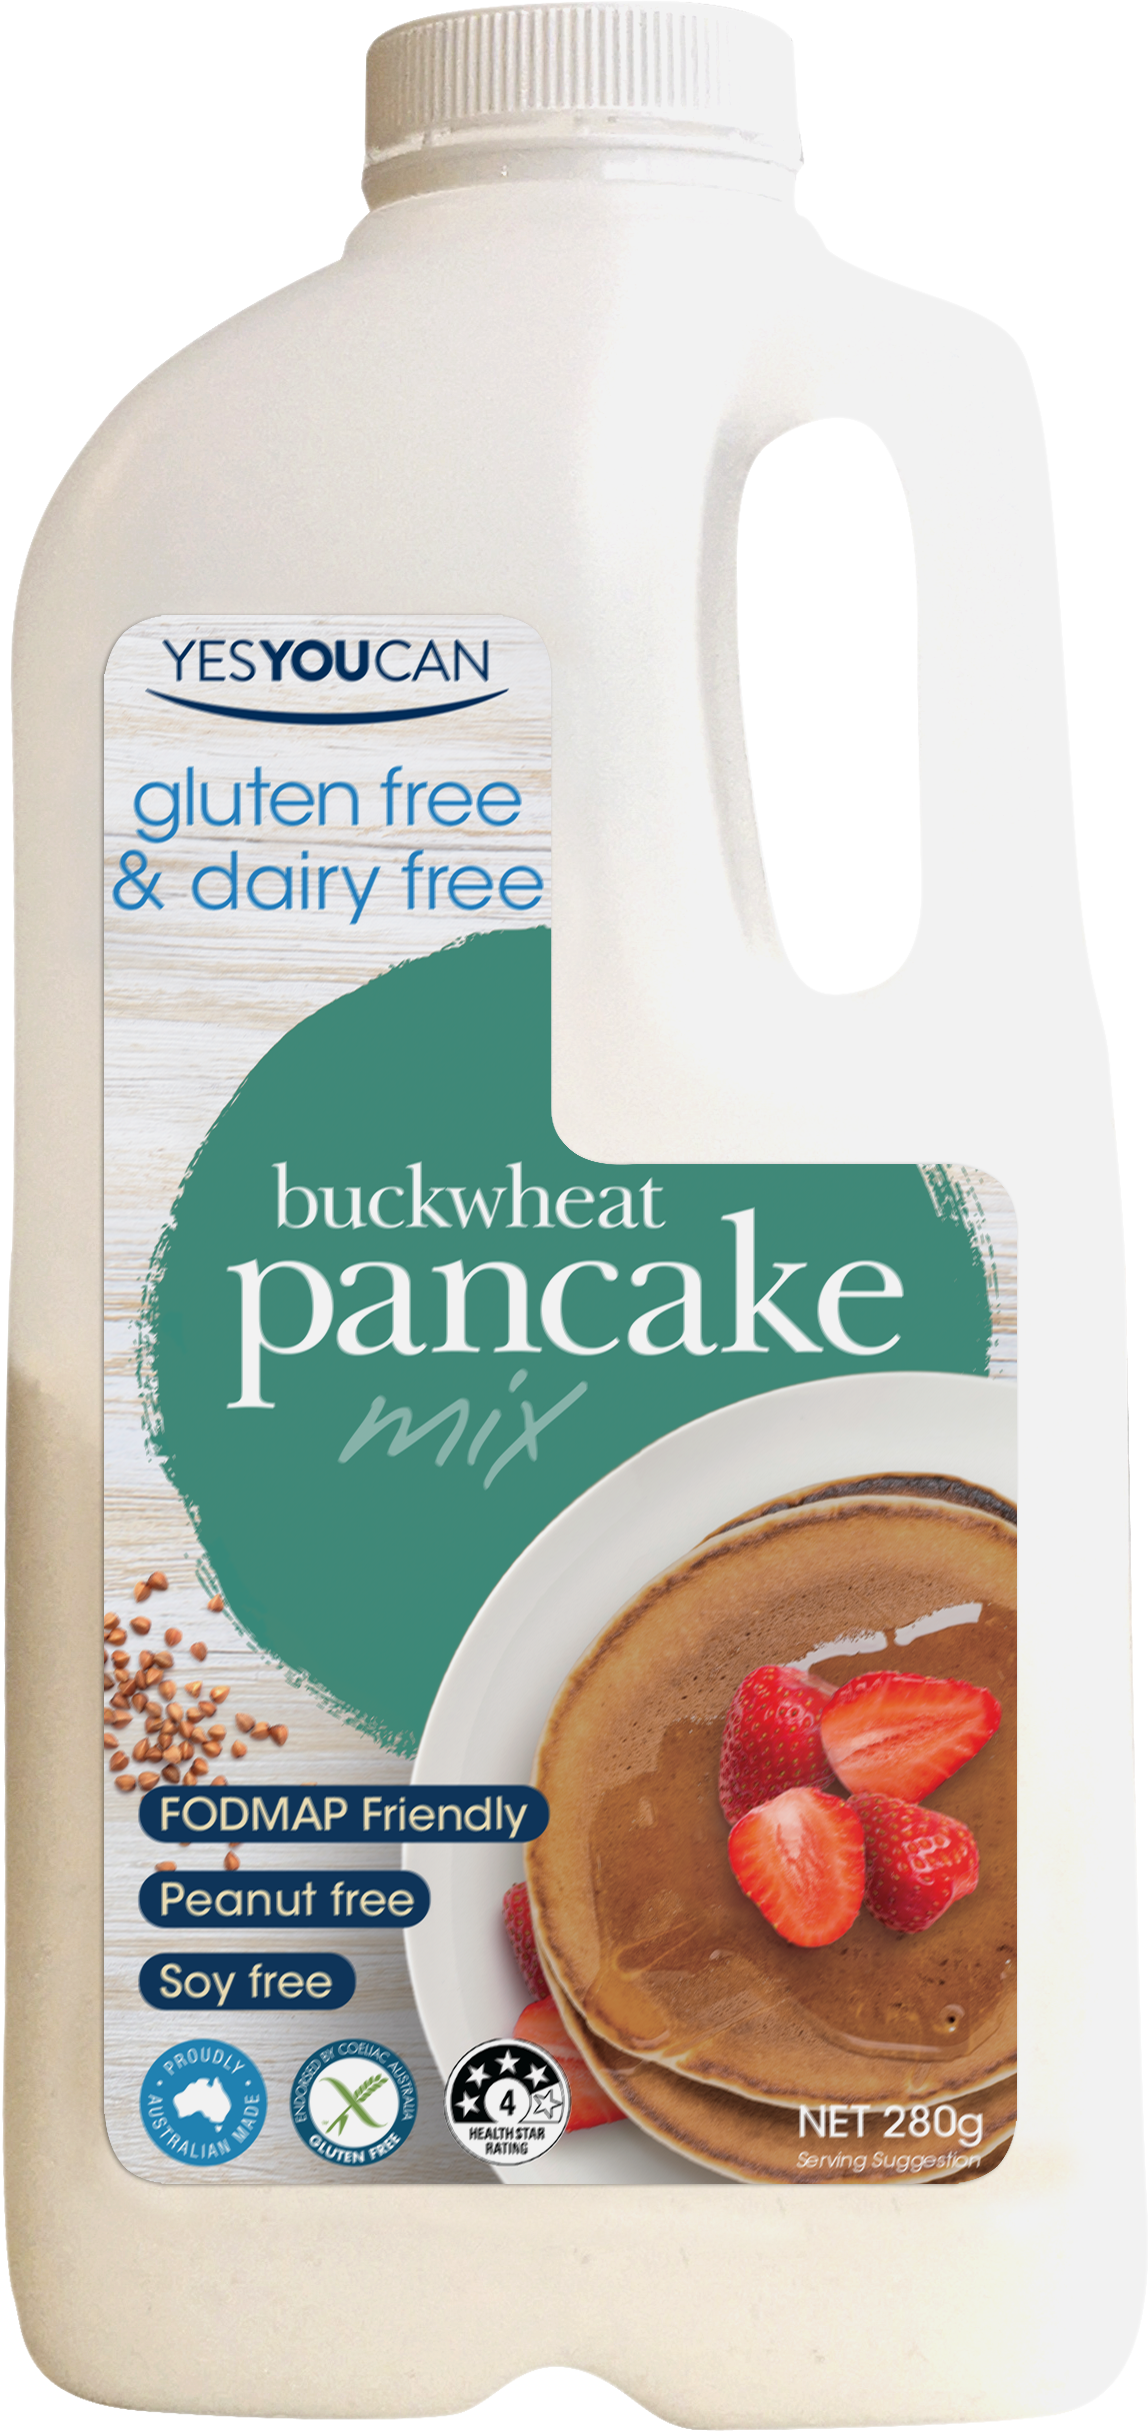 buckwheat pancake gluten free yesyoucan front image product photo